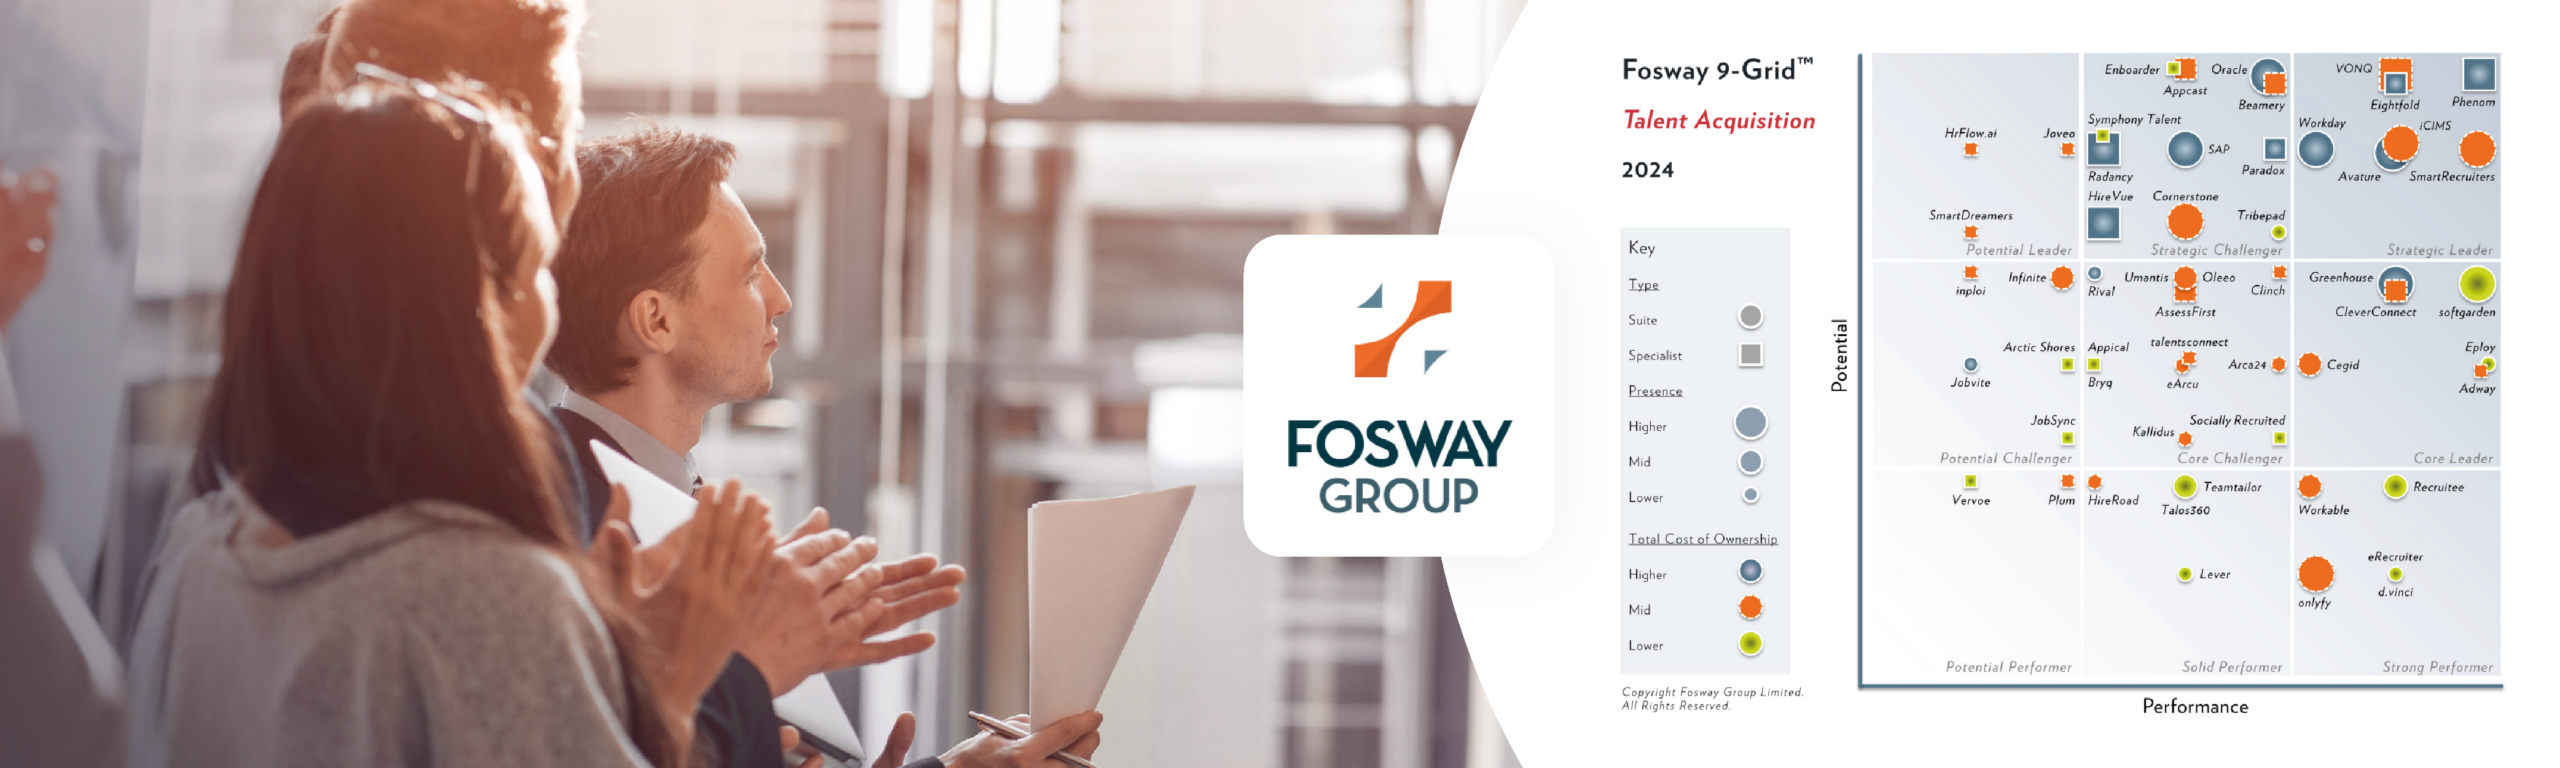 Fosway 9-Grid VONQ Strategic Leader